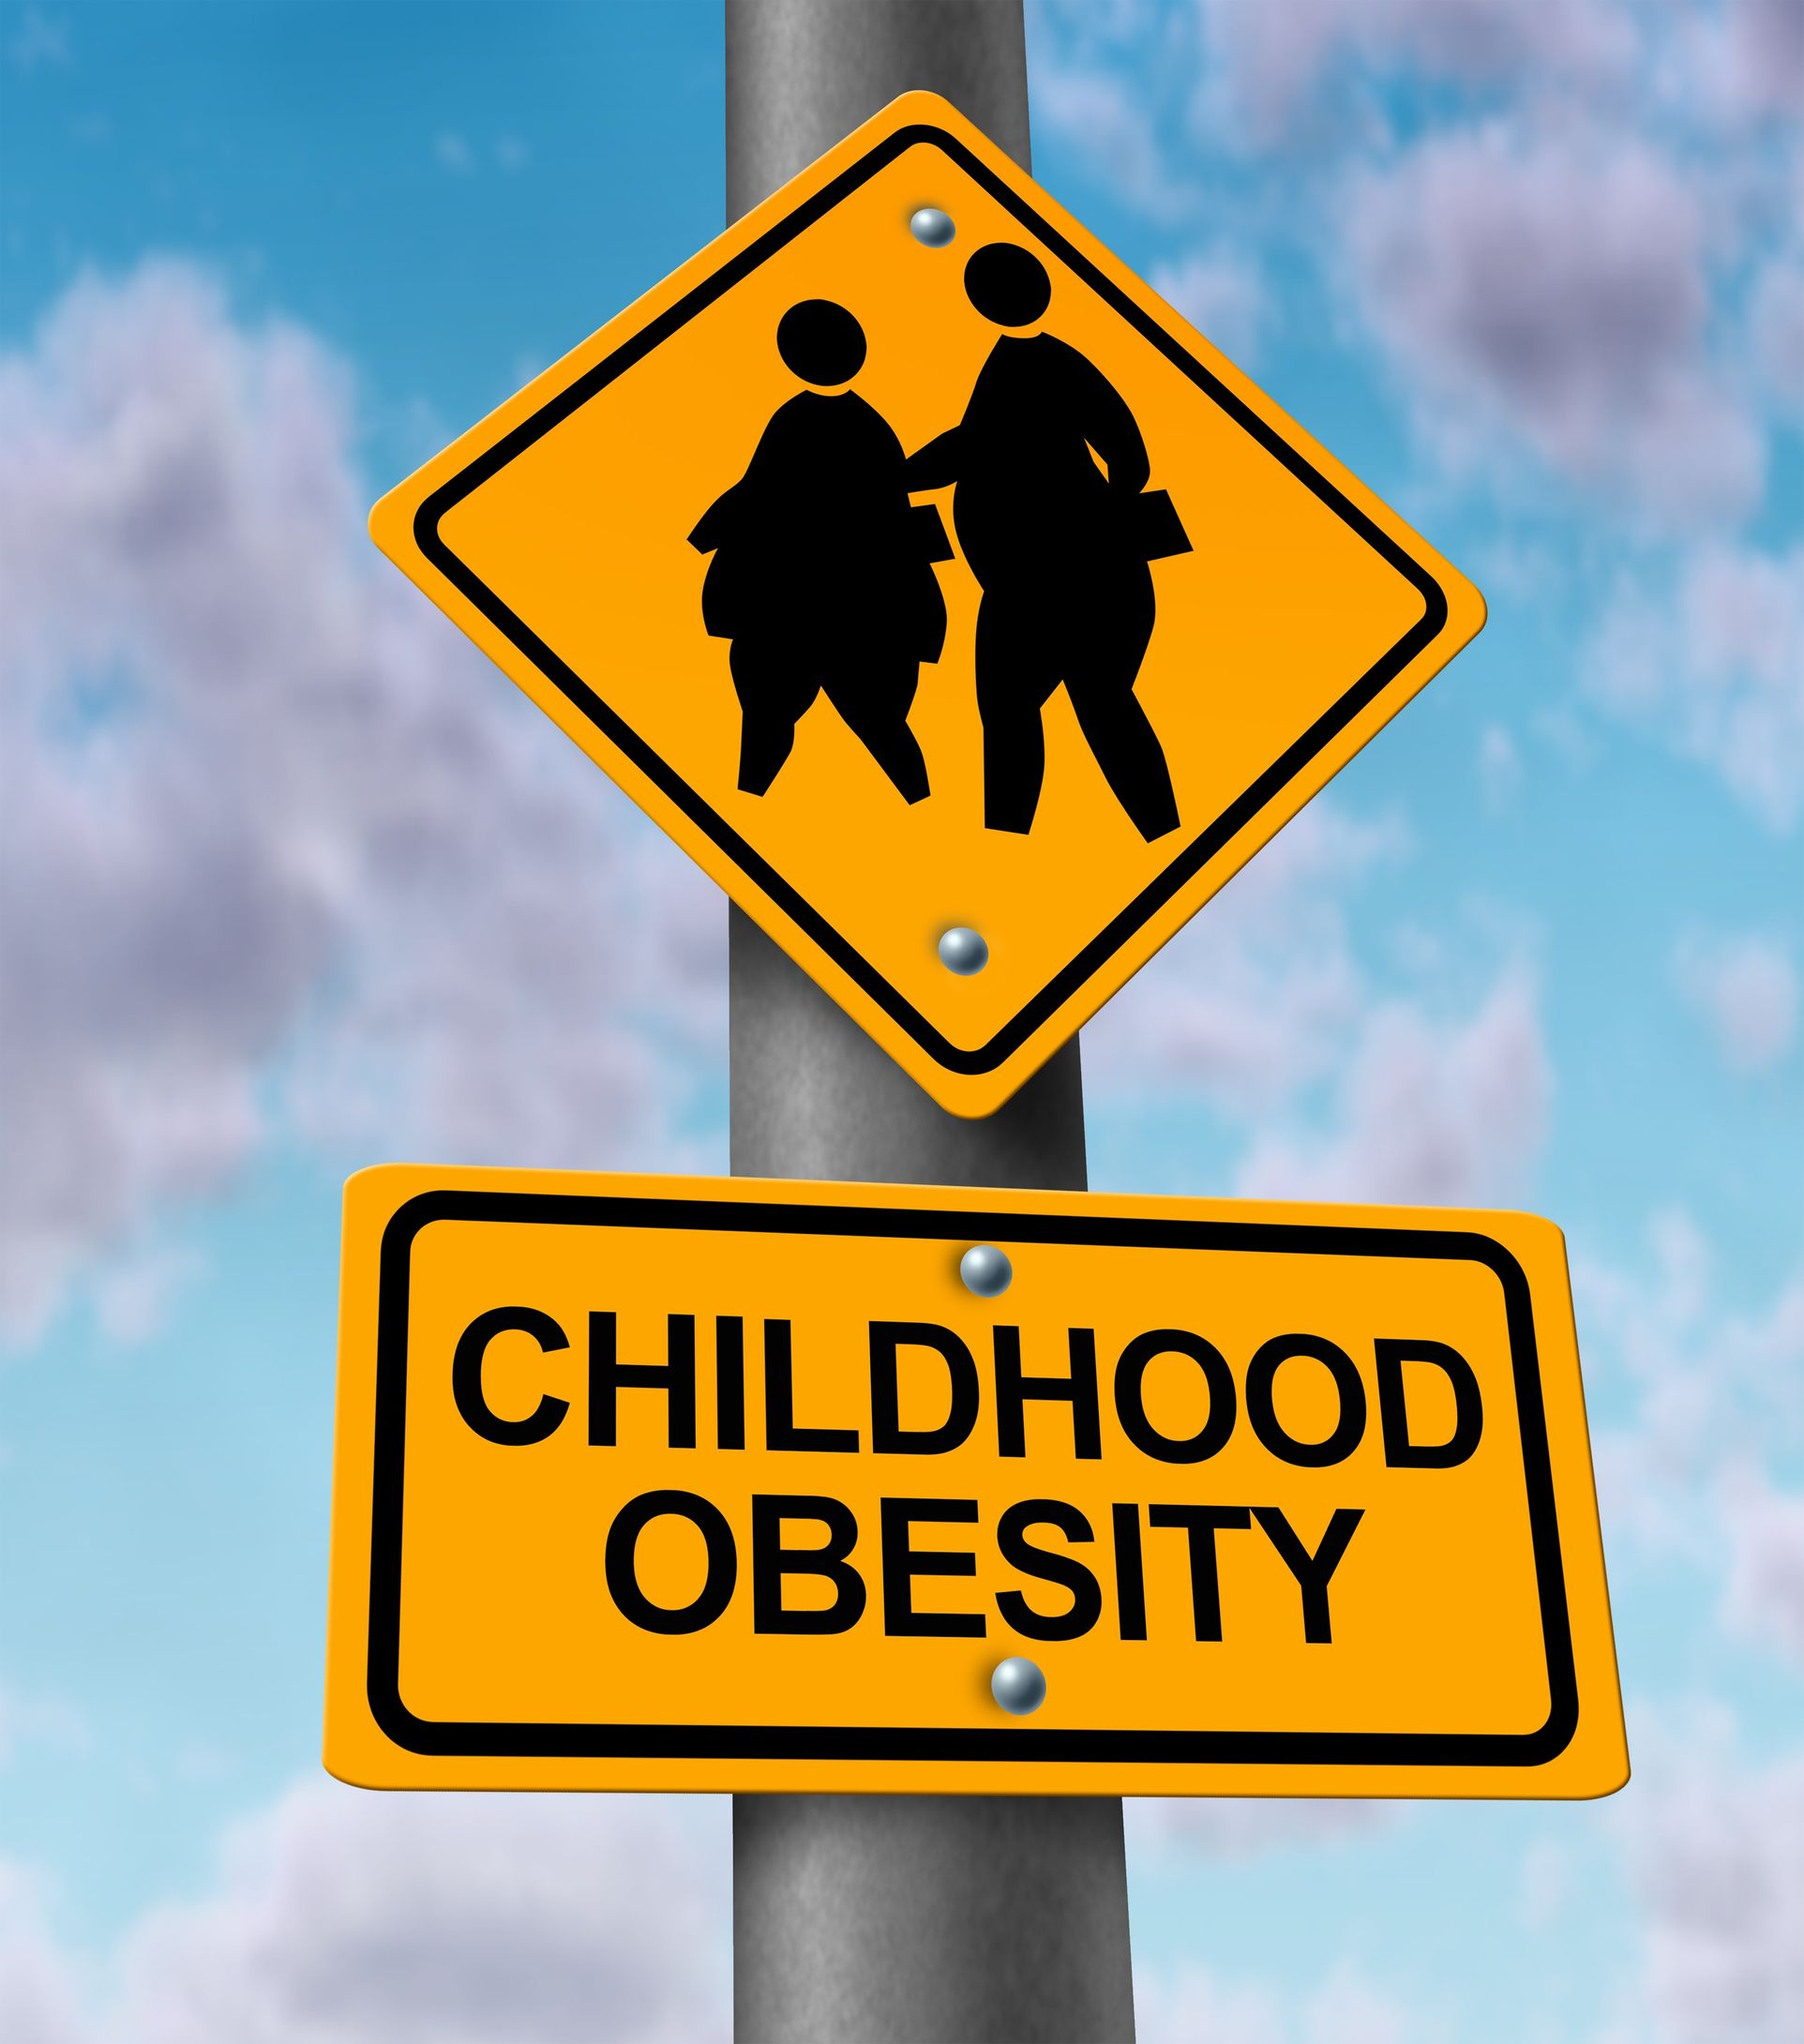 Childhood obesity rates